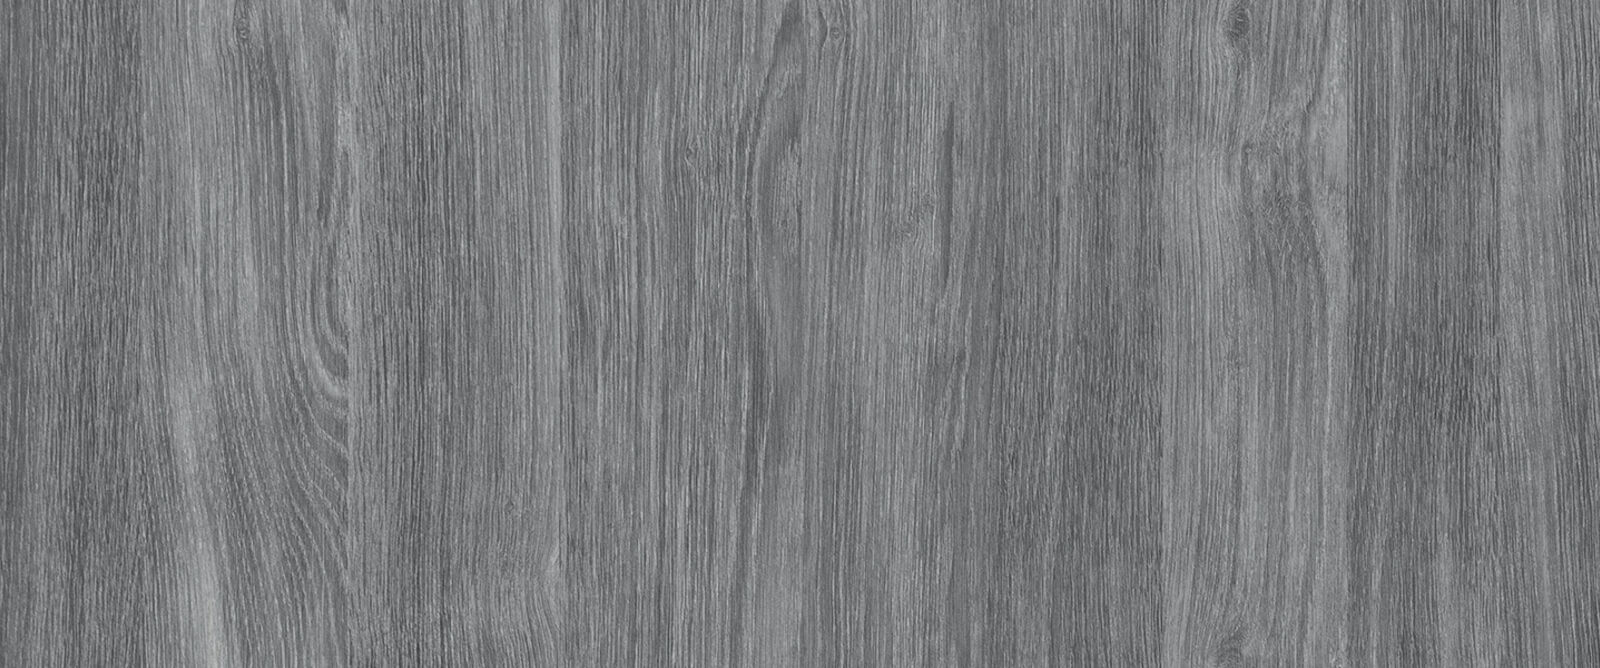 Conti® woodec Sheffield Oak concrete